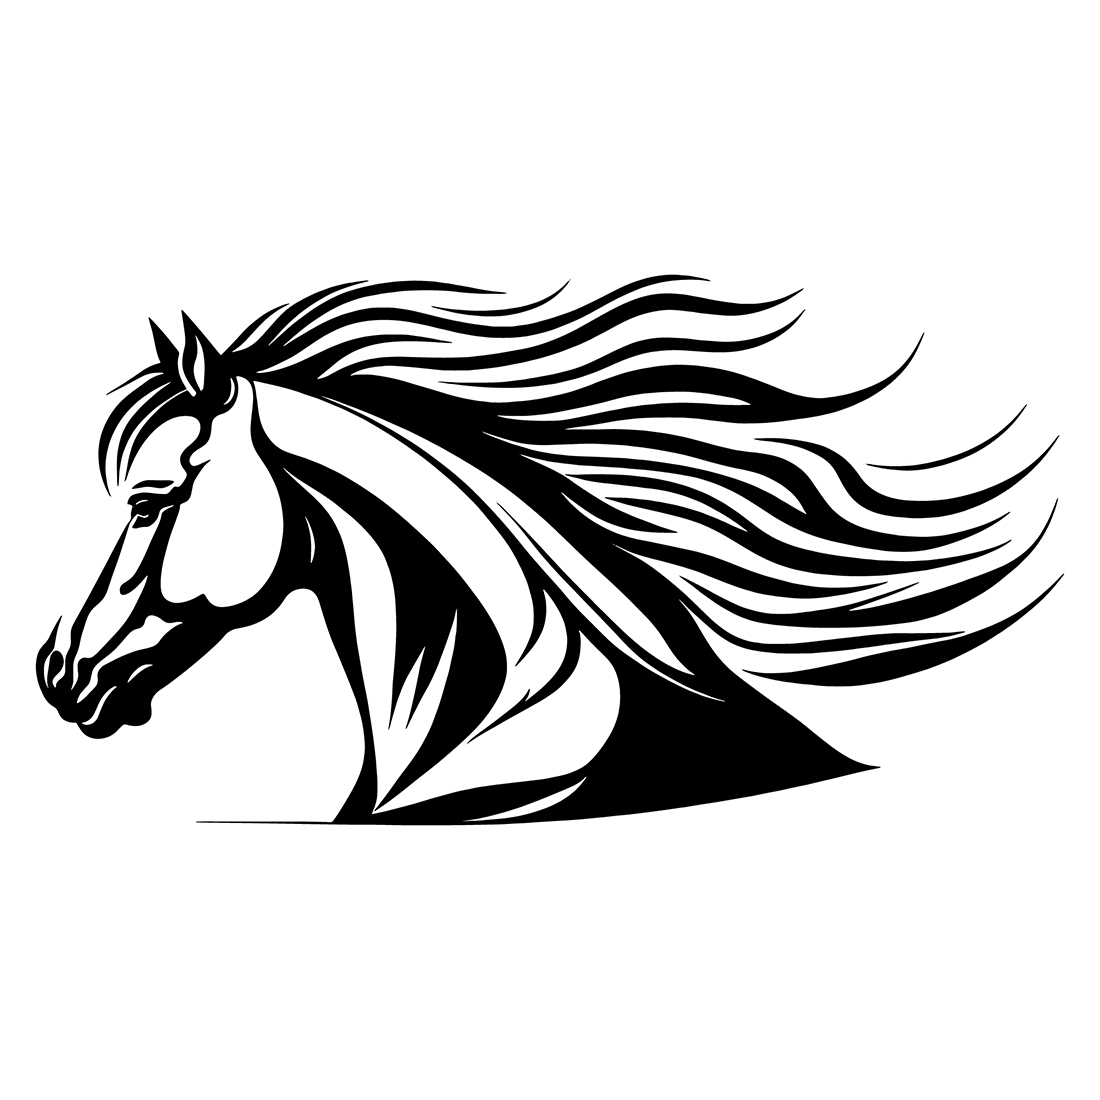 Dark Horse Logo - Dark Horse Transparent PNG - 915x915 - Free Download on  NicePNG